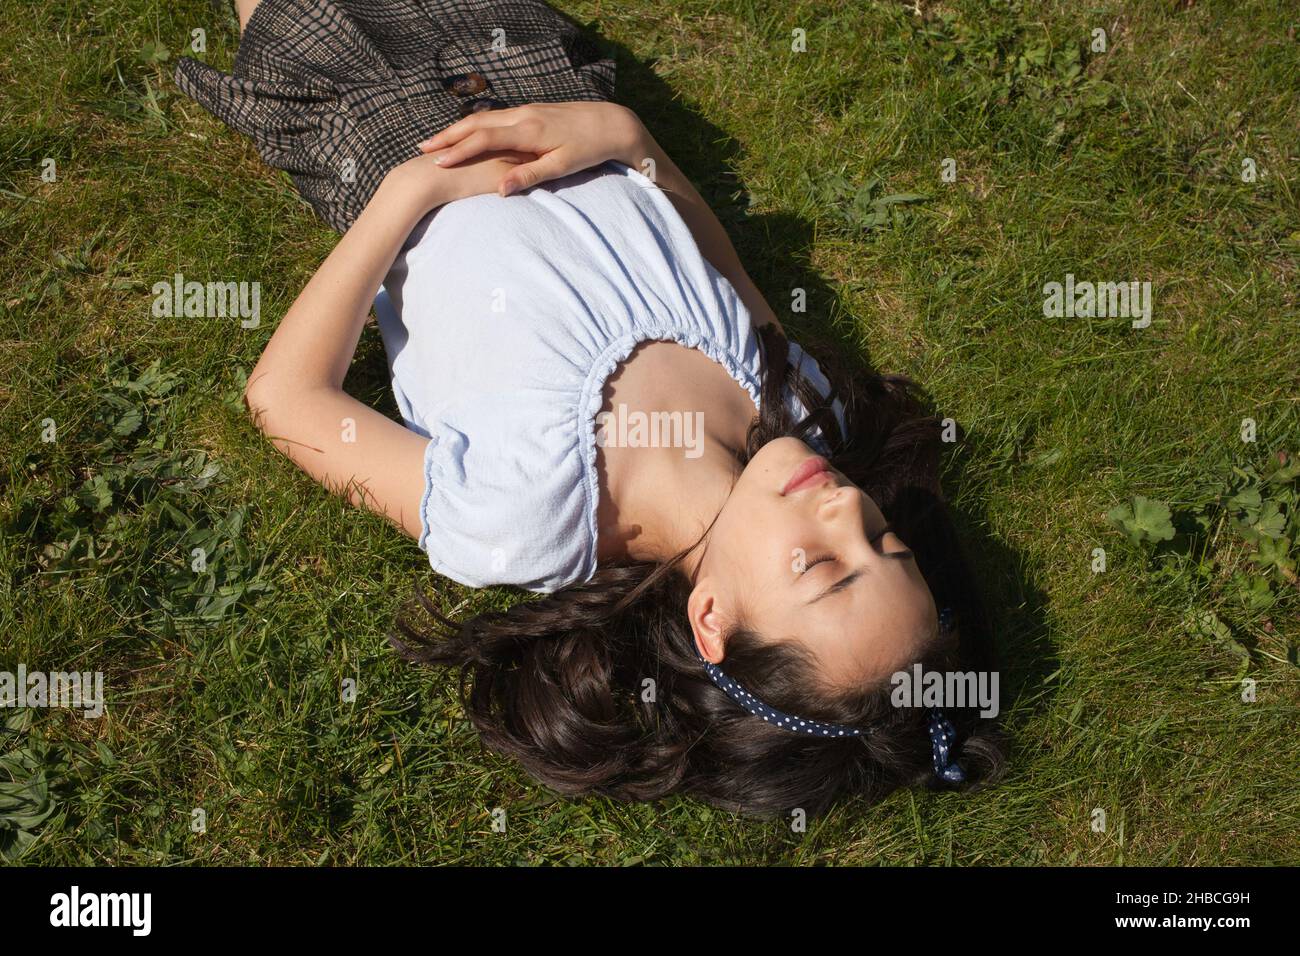 A girl relaxing in her garden Stock Photo